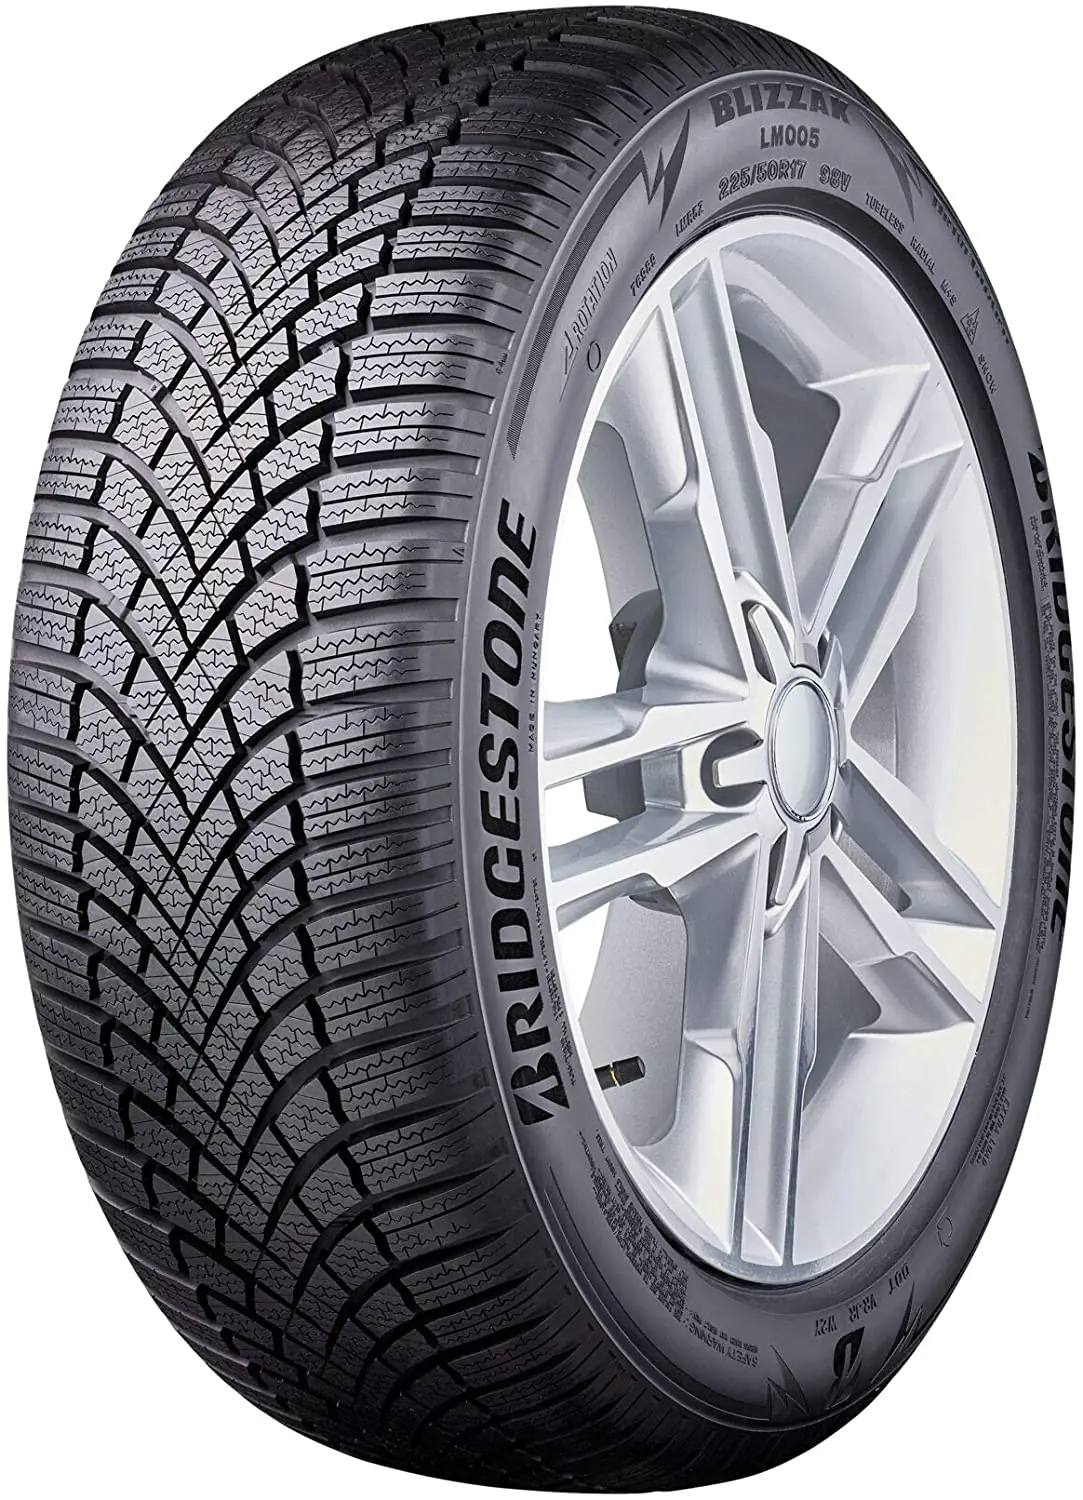 Bridgestone Bridgestone 205/55 R16 91H LM005 pneumatici nuovi Invernale 